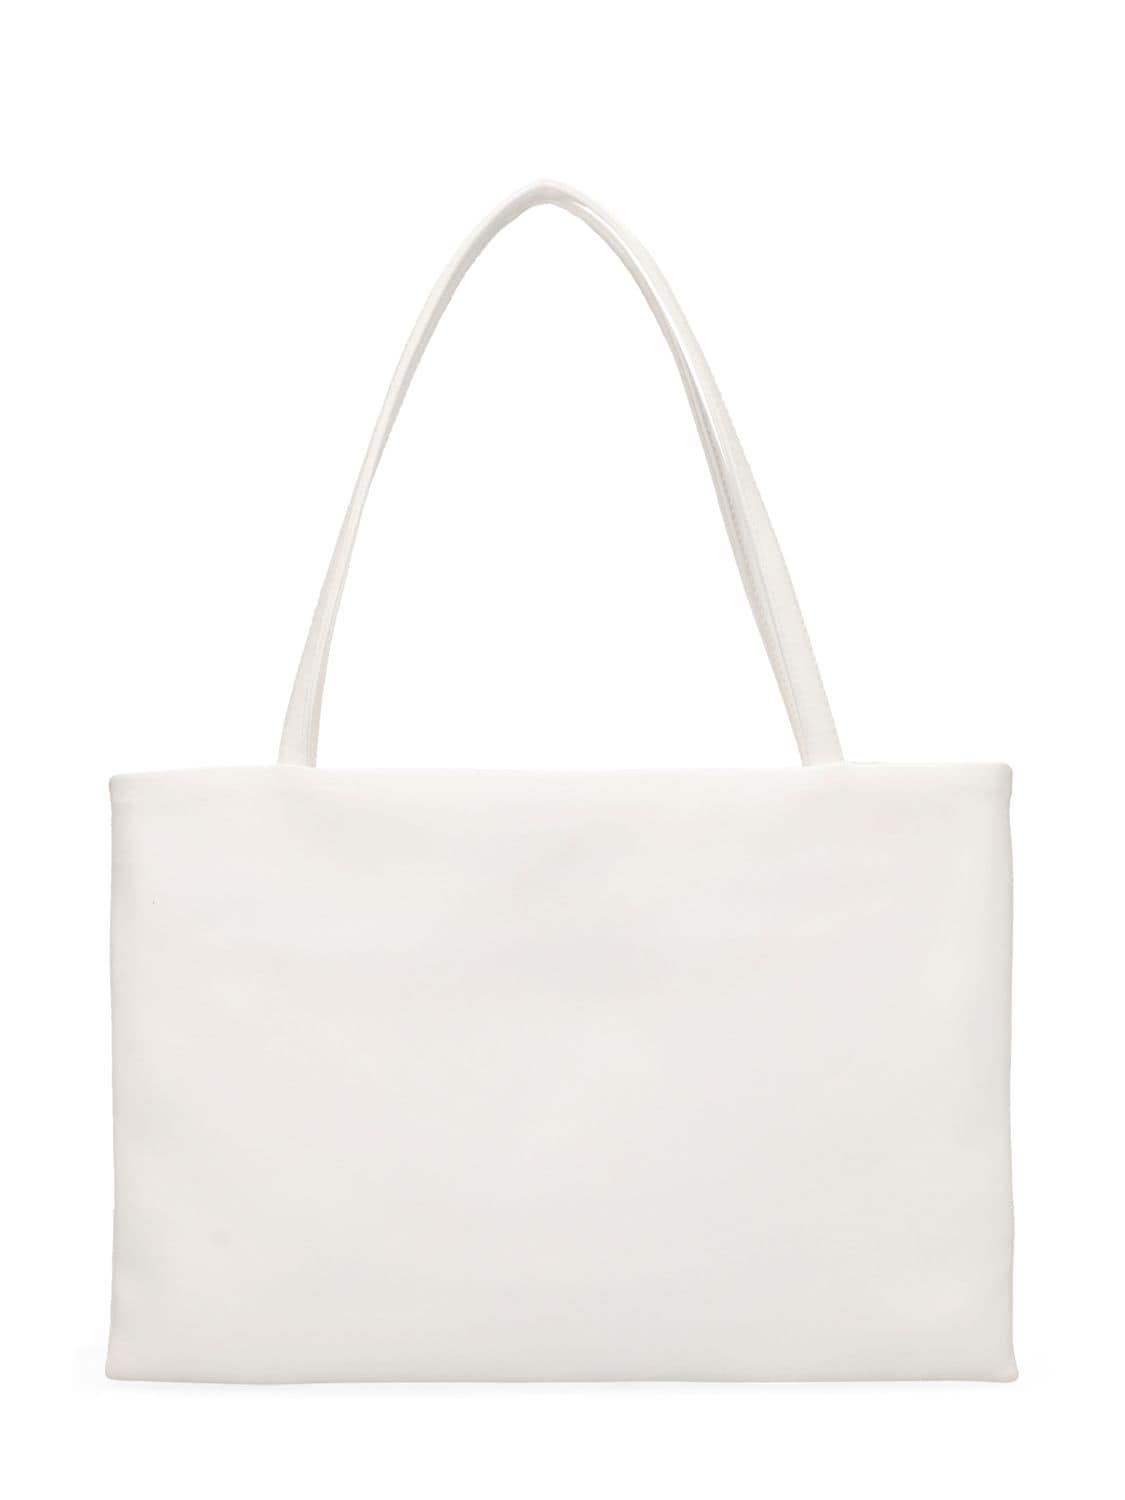 Shop 16arlington Small Suki Shoulder Bag In White